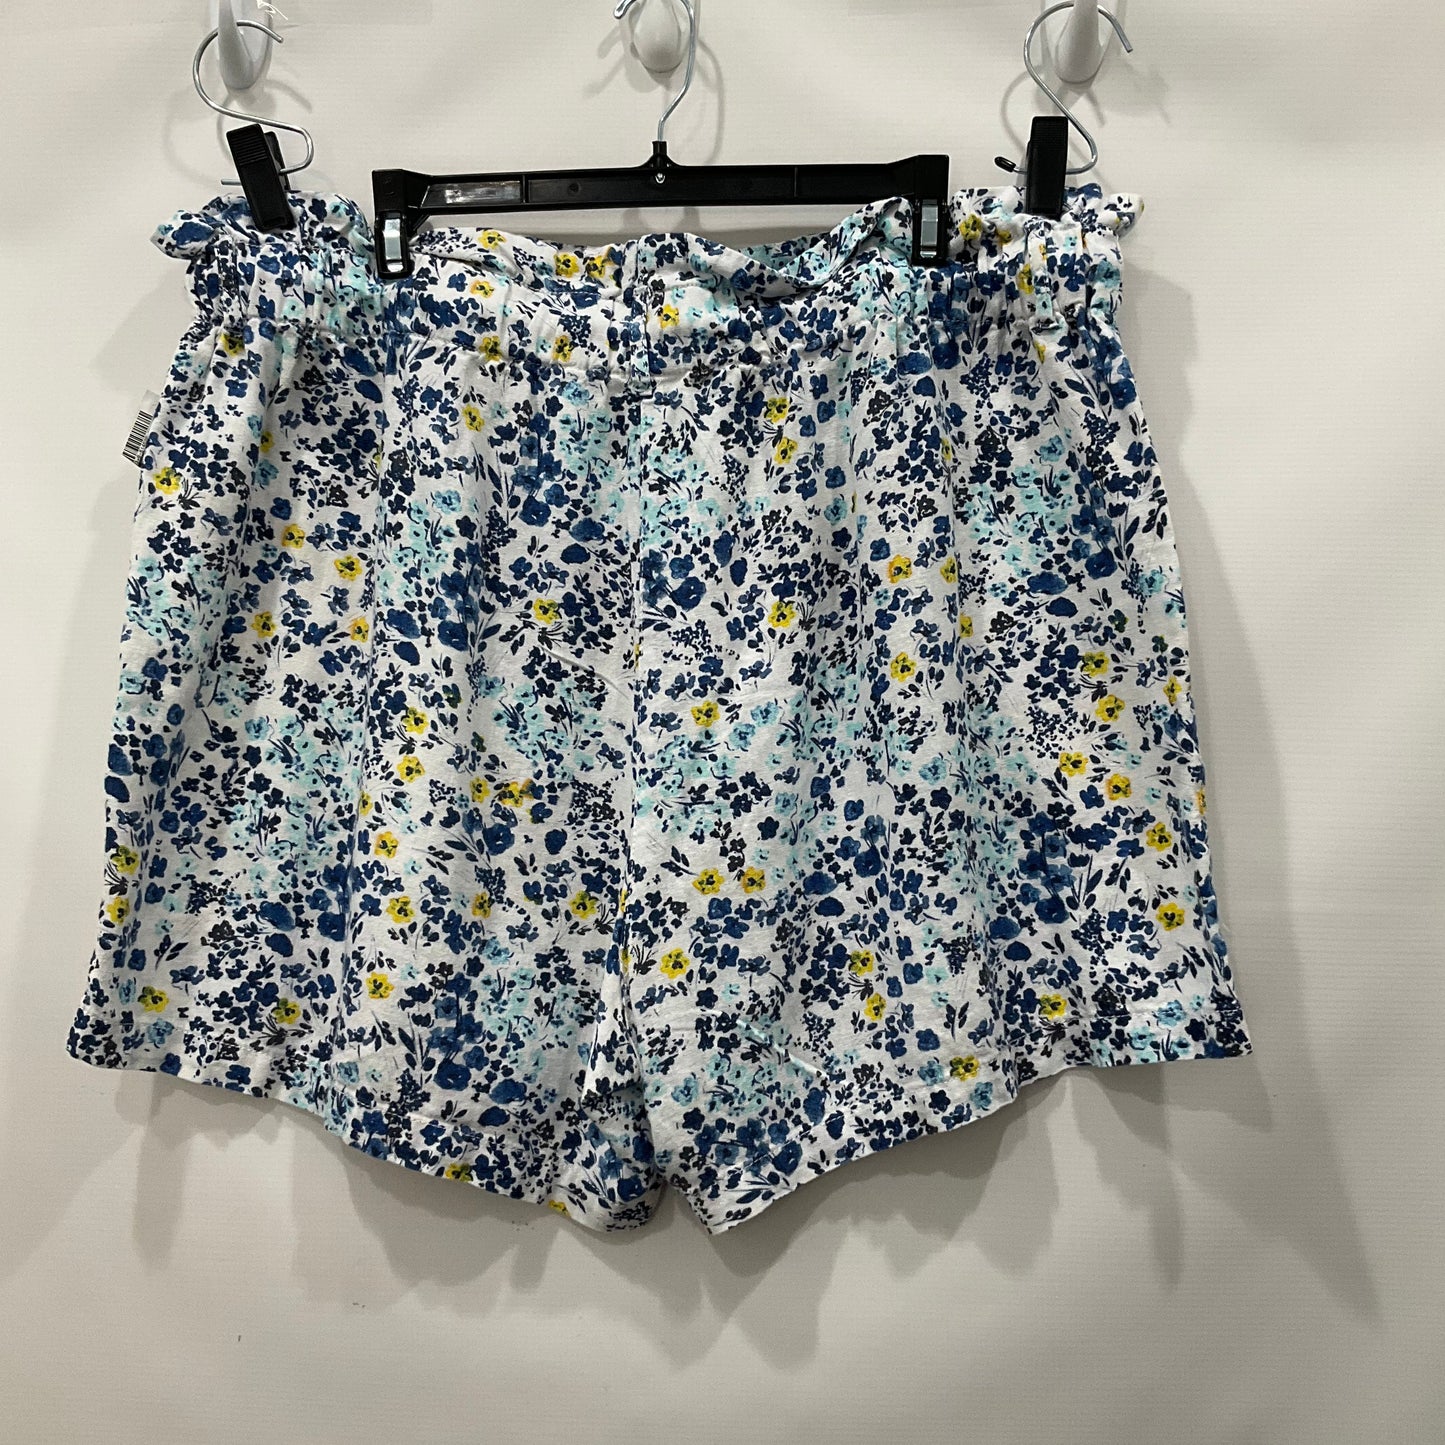 Blue Shorts Ana, Size 1x